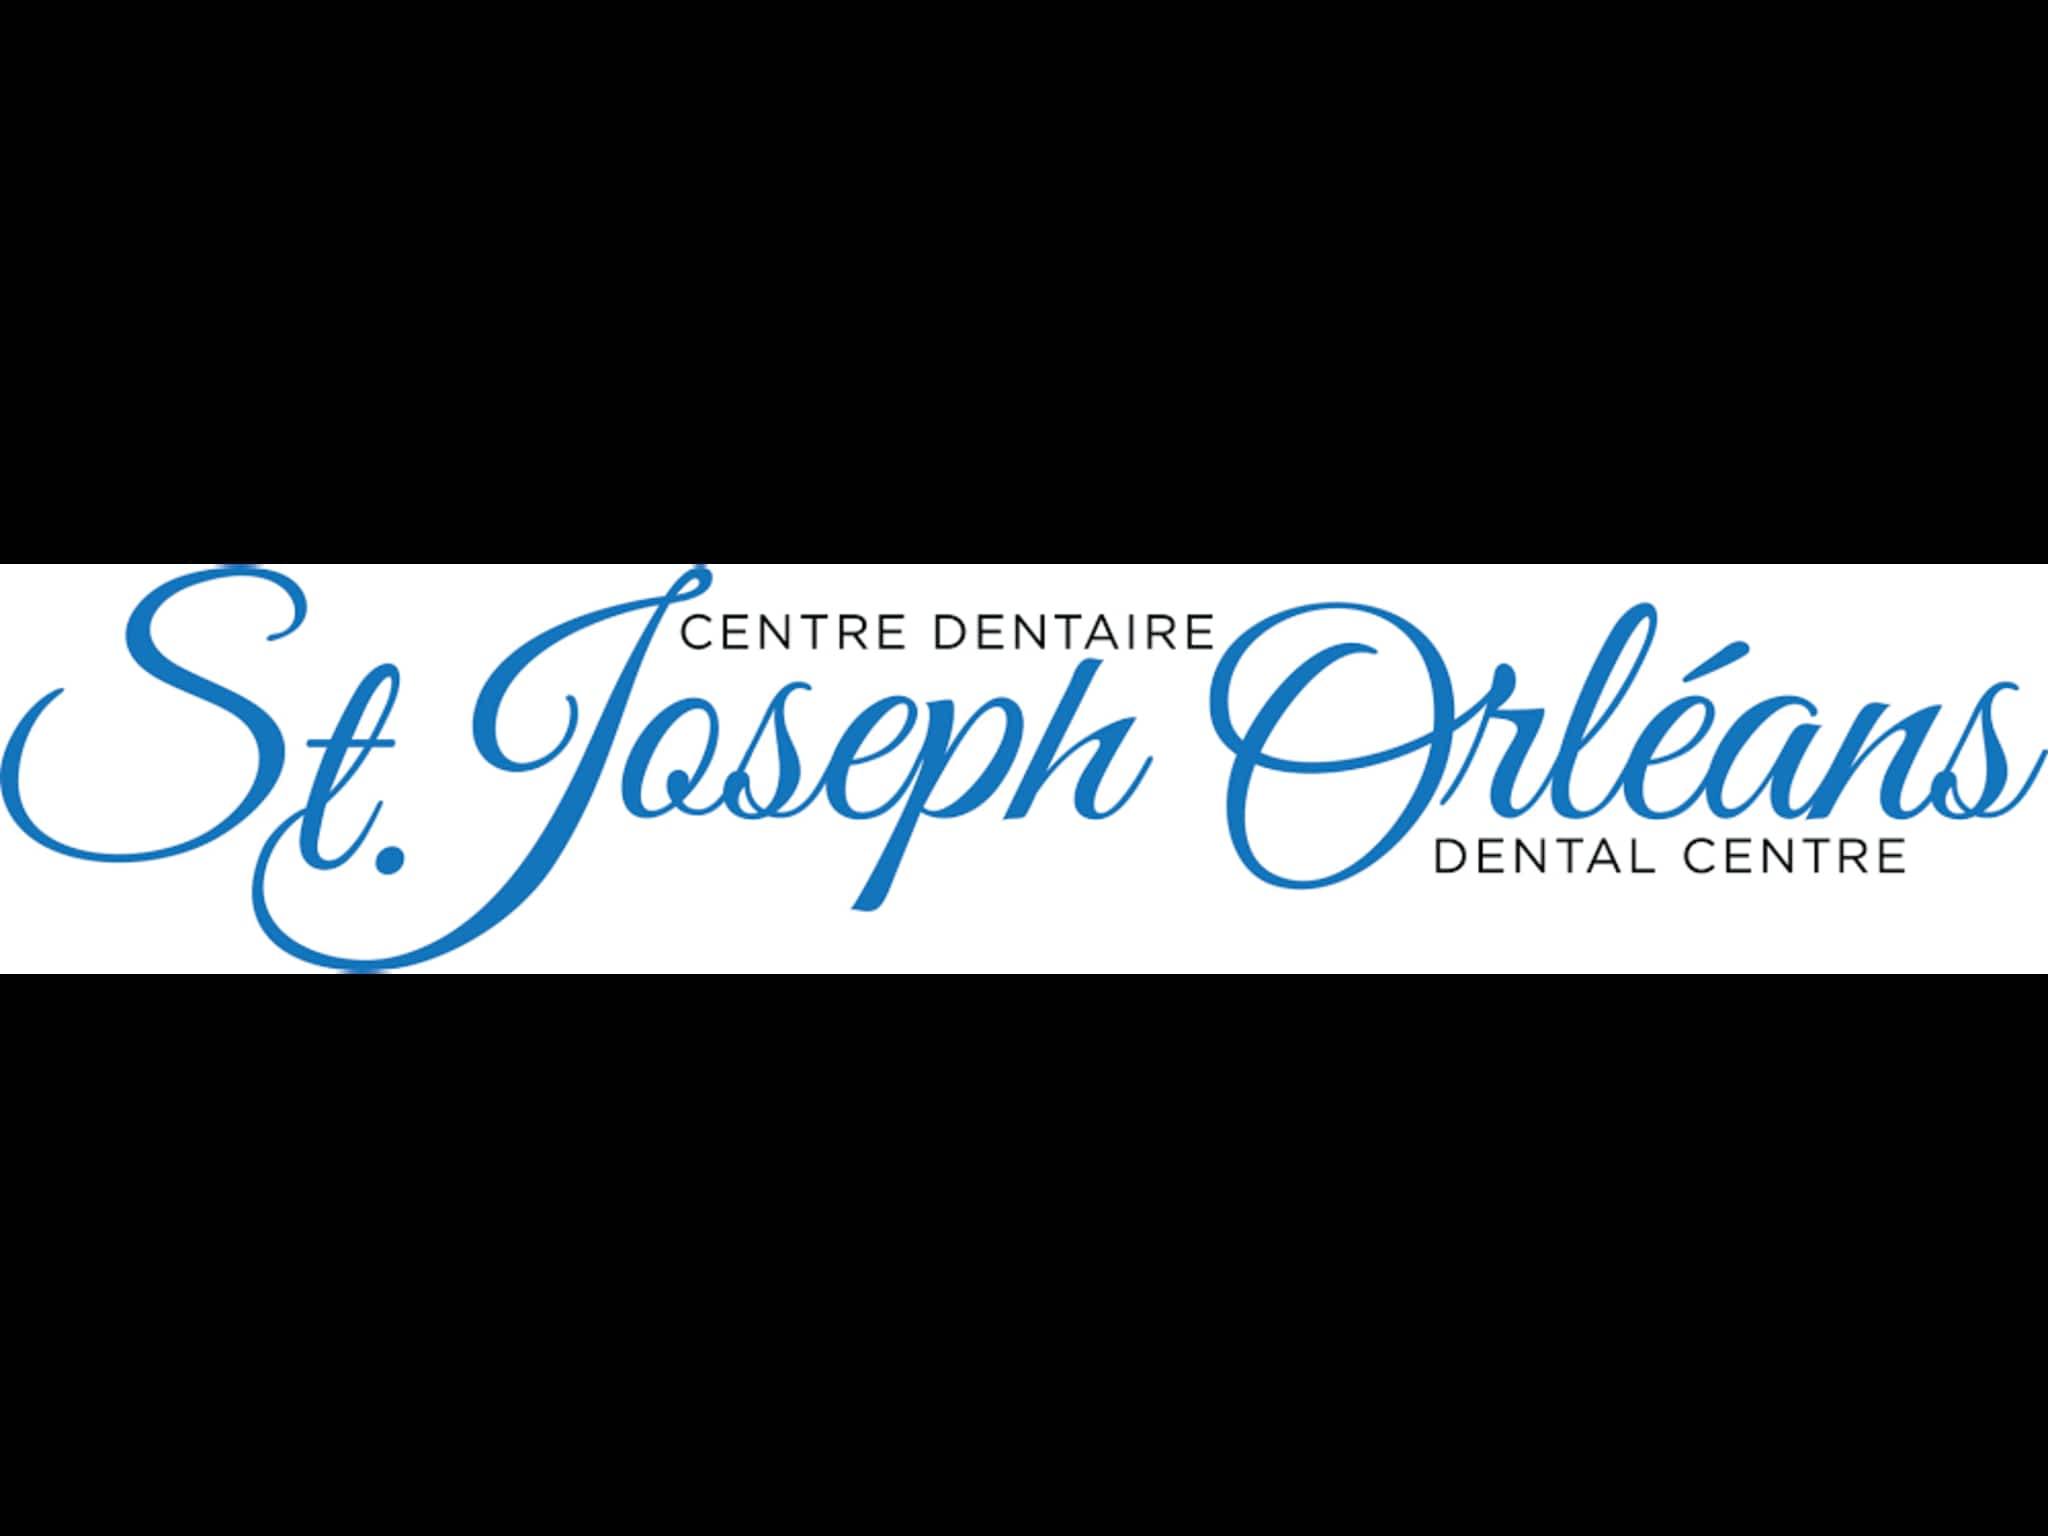 photo St. Joseph Orleans Dental Centre